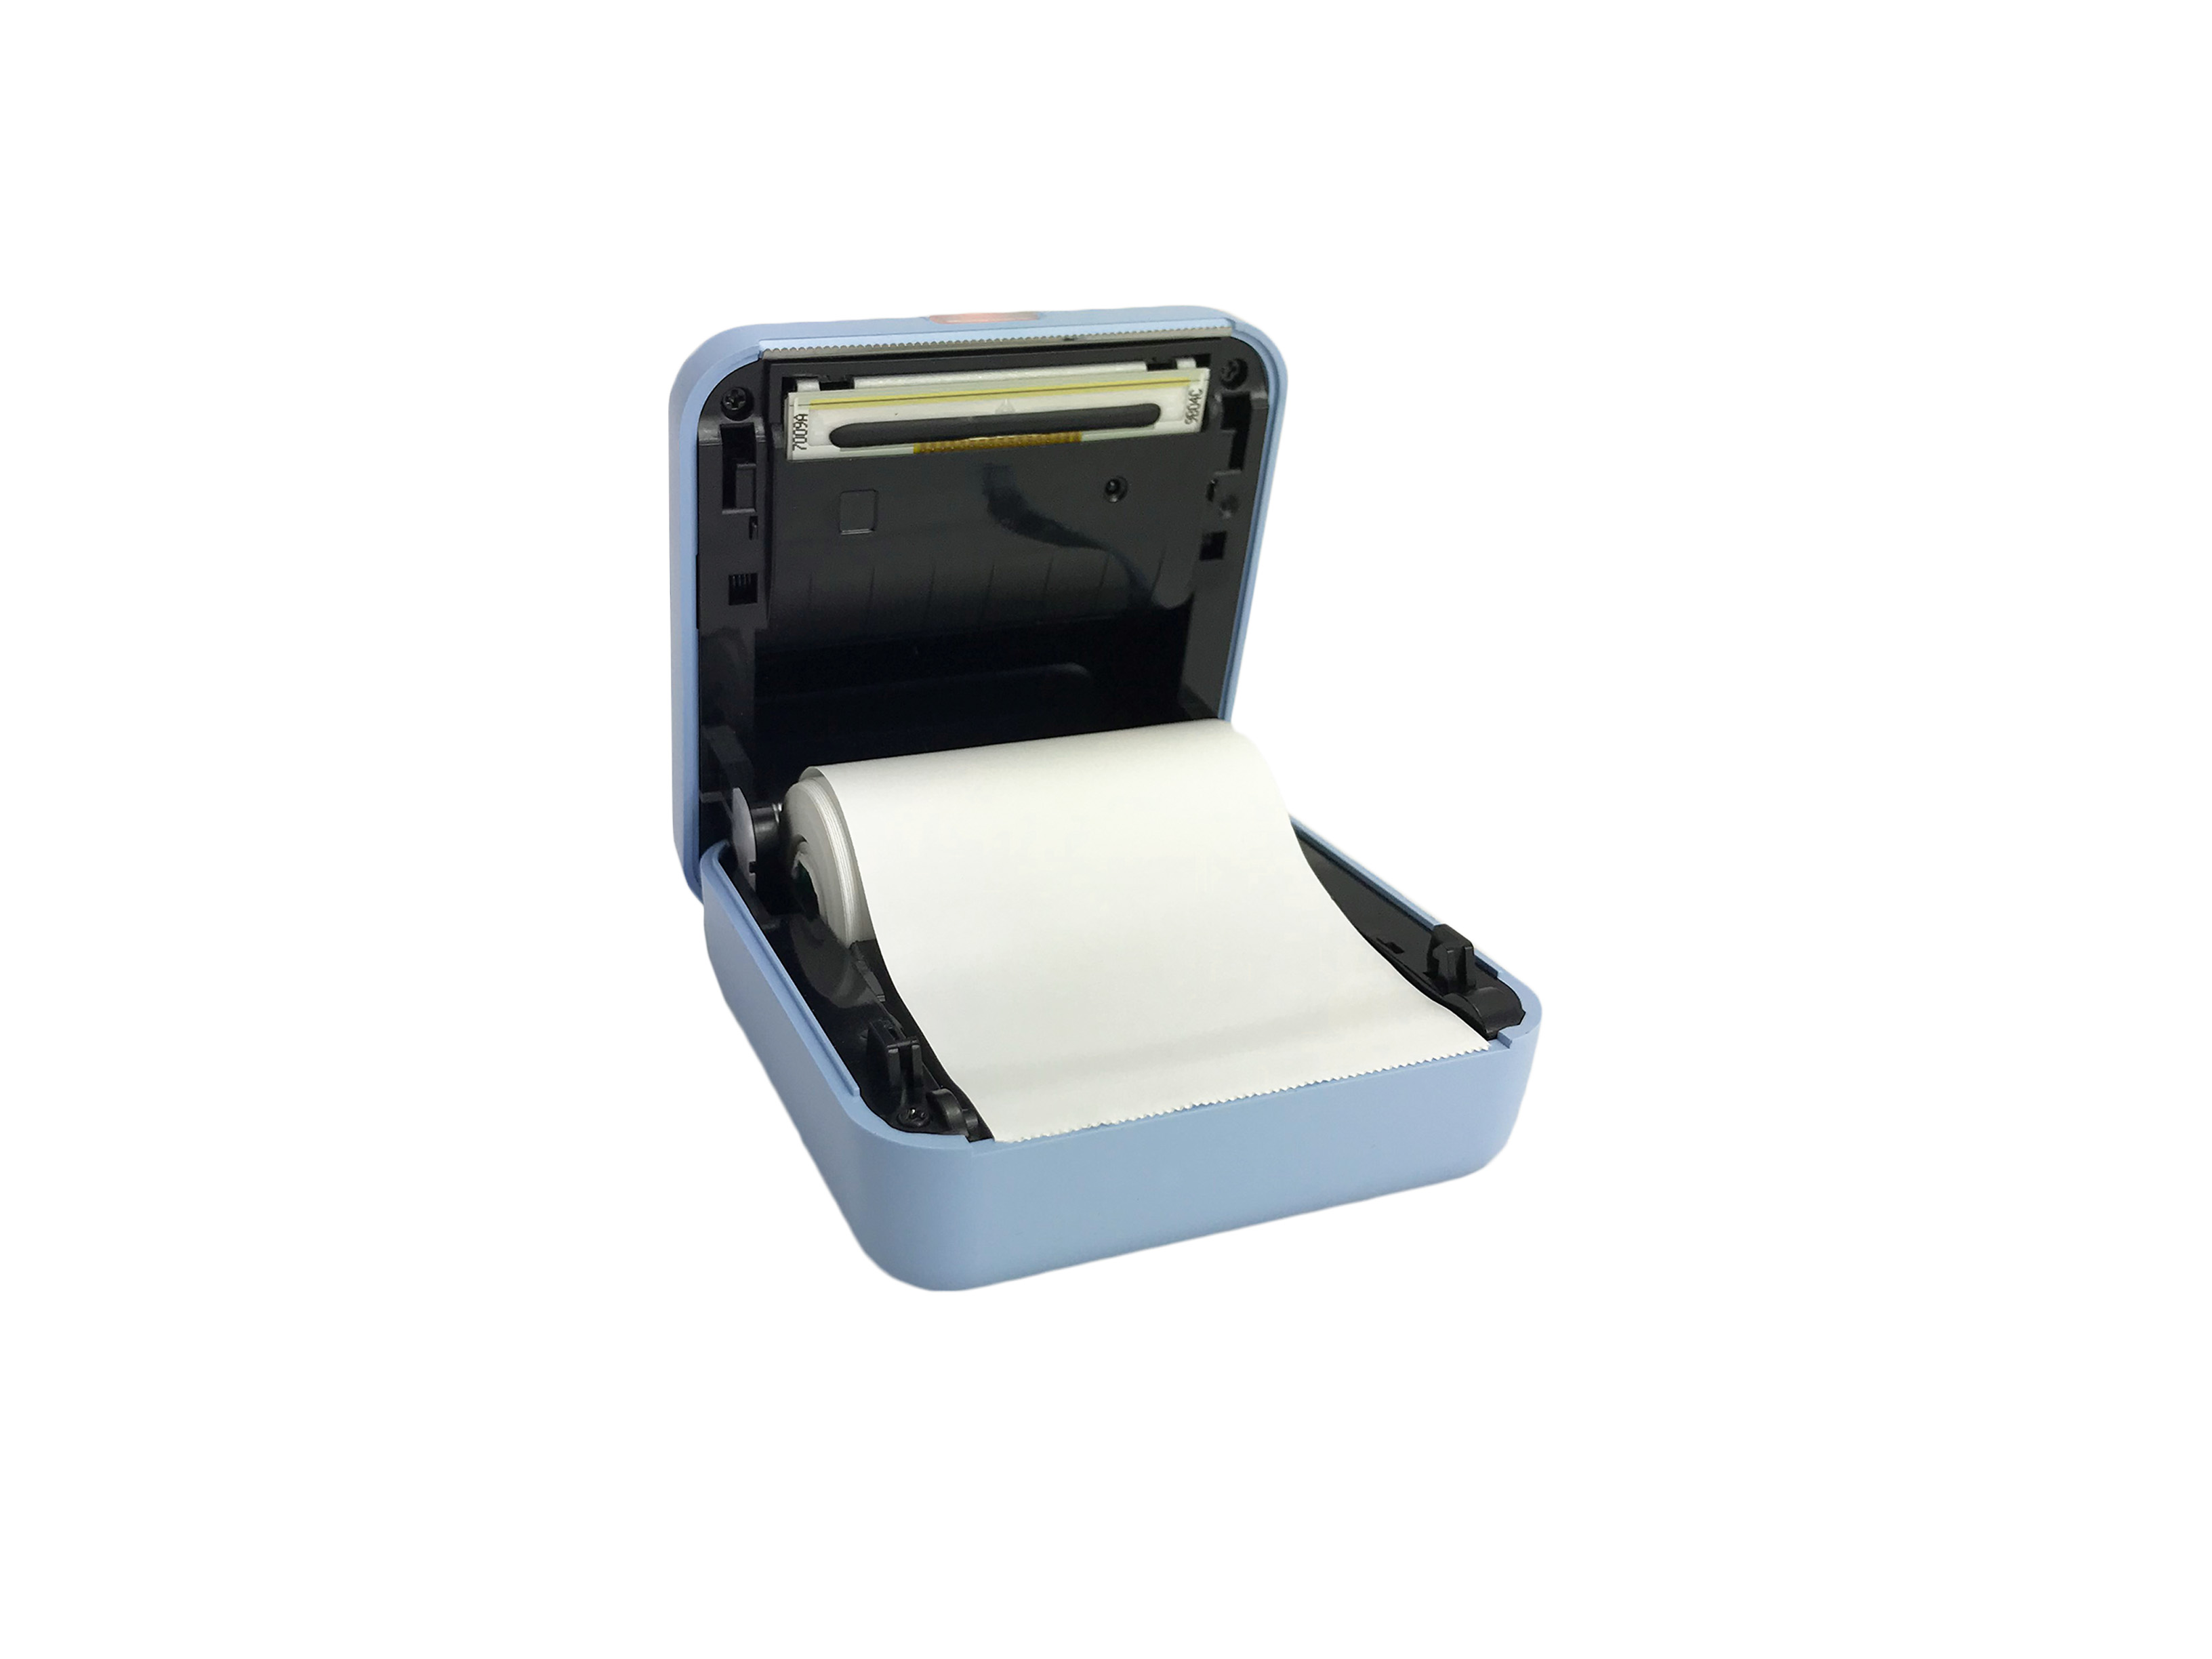 Компактный термопринтер Peripage Mini Printer А6 оптом